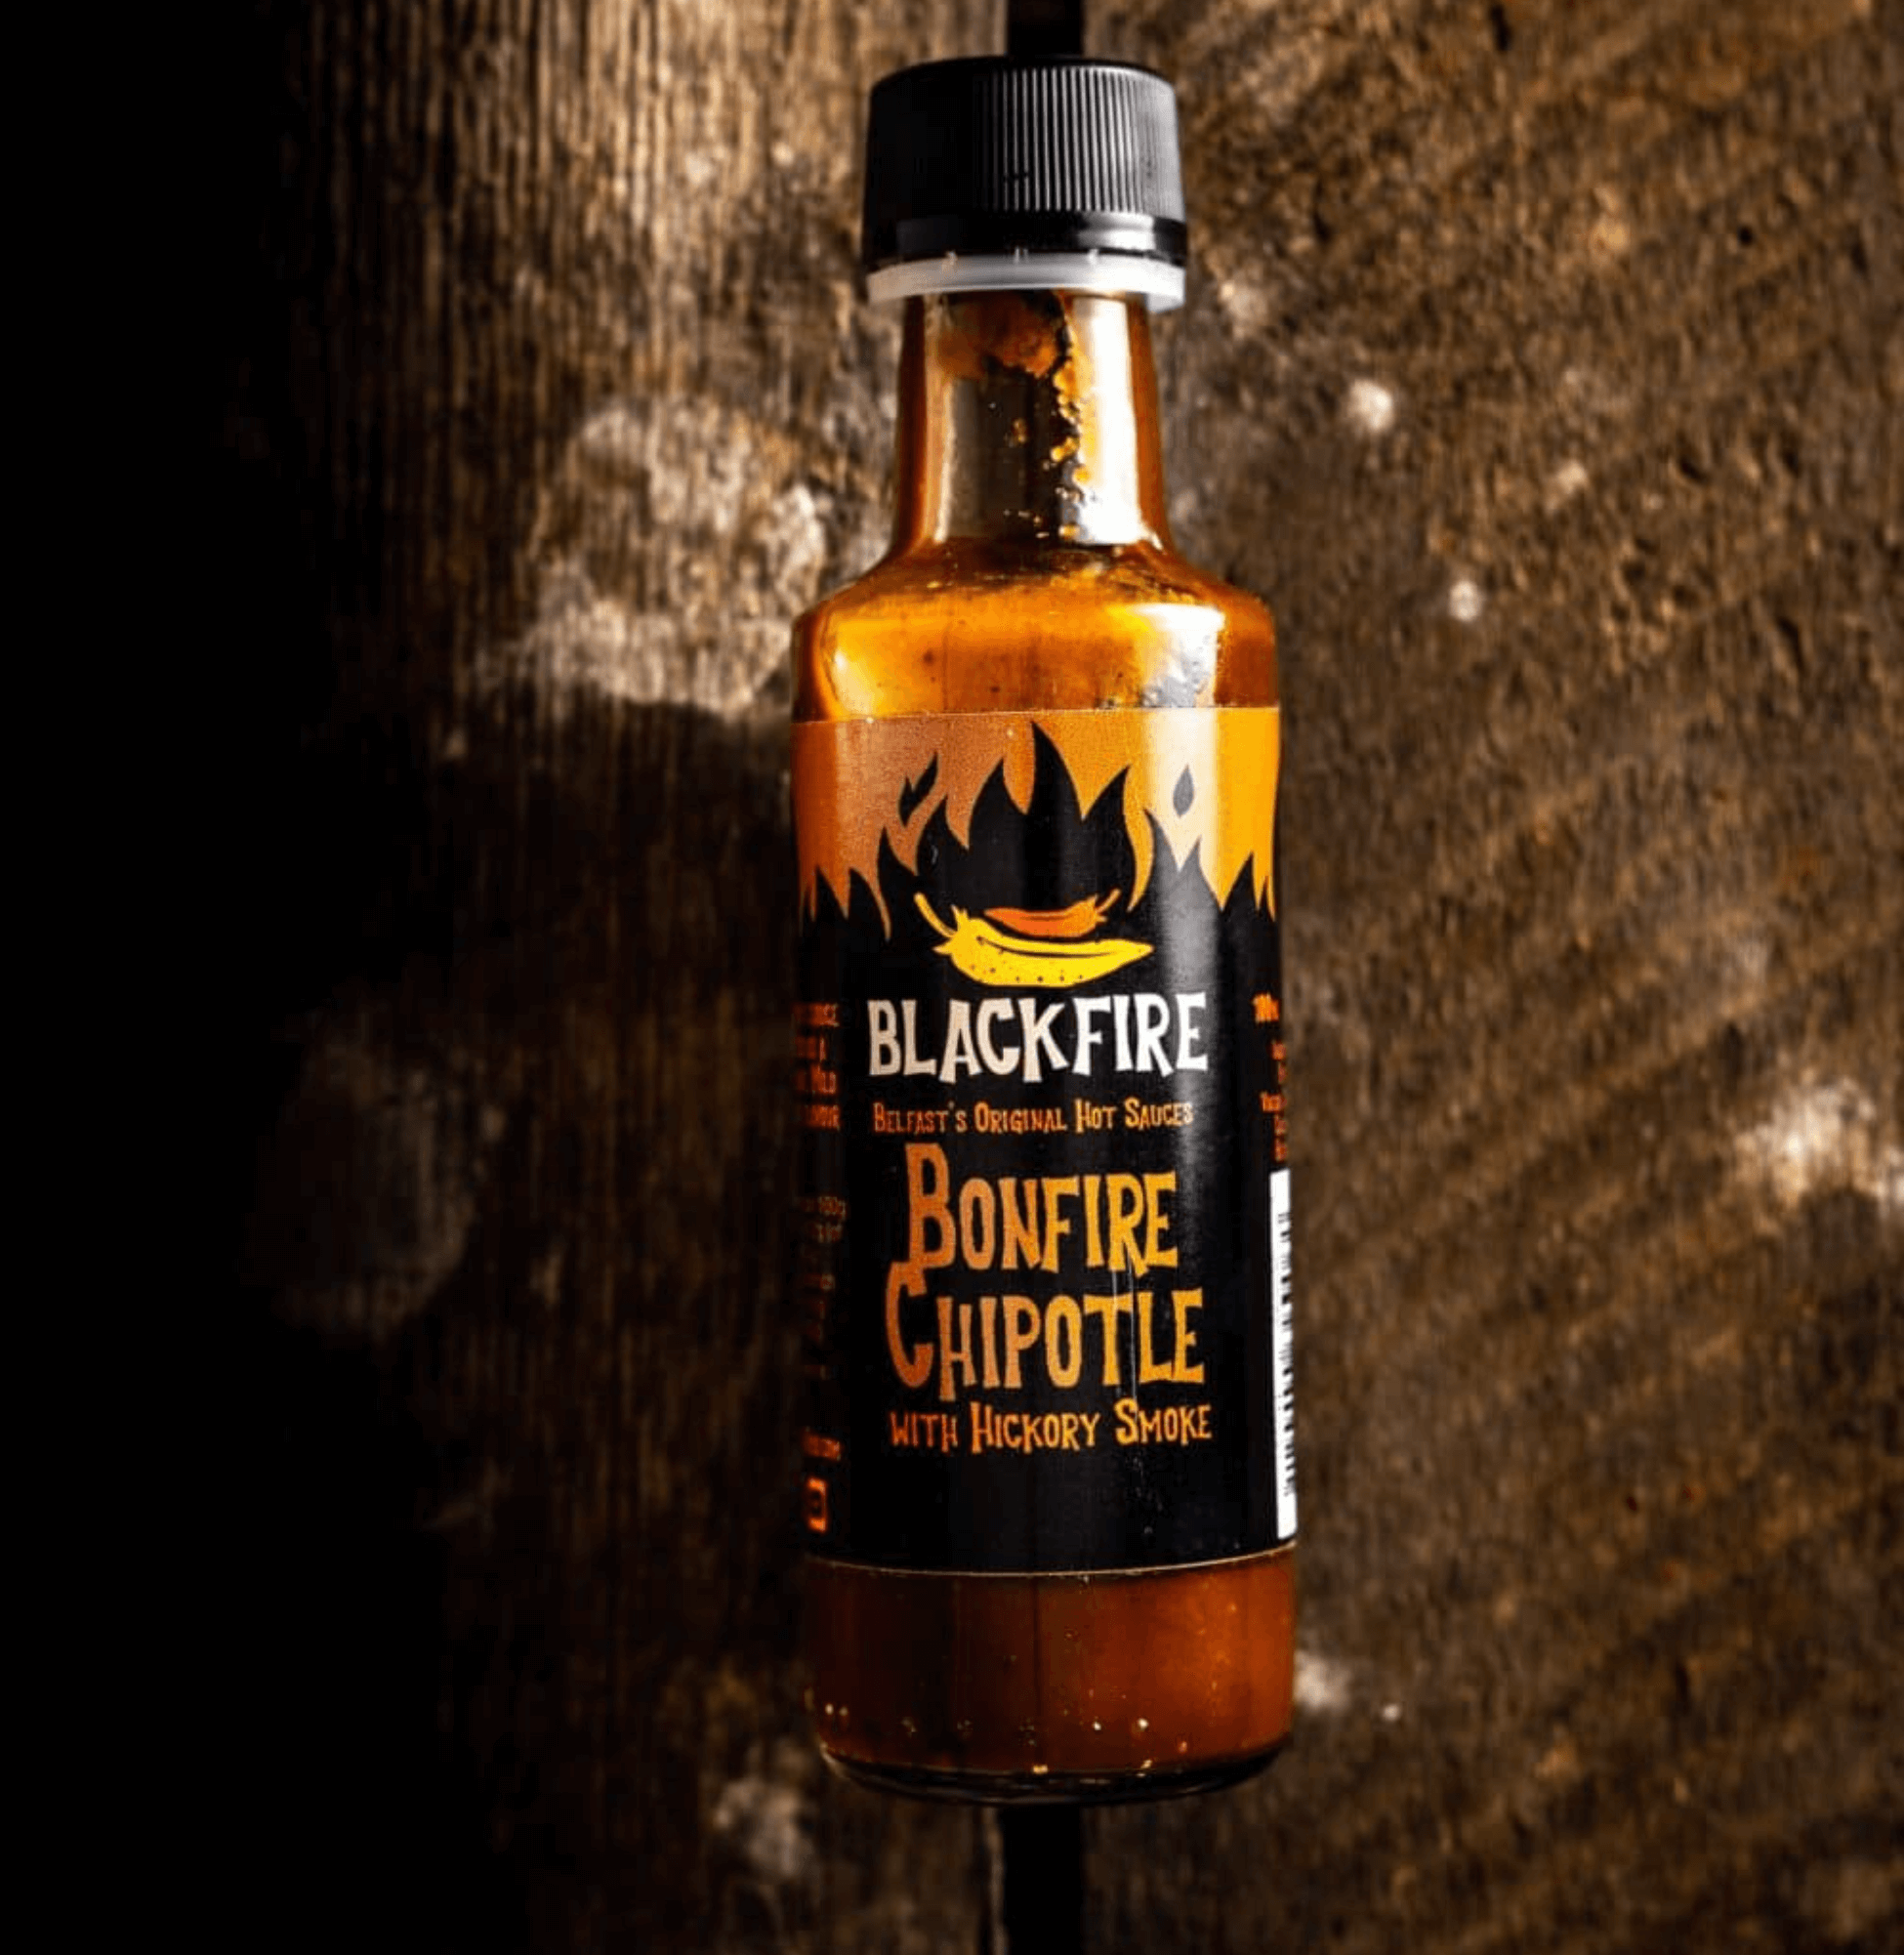 Blackfire Bonfire Chipotle